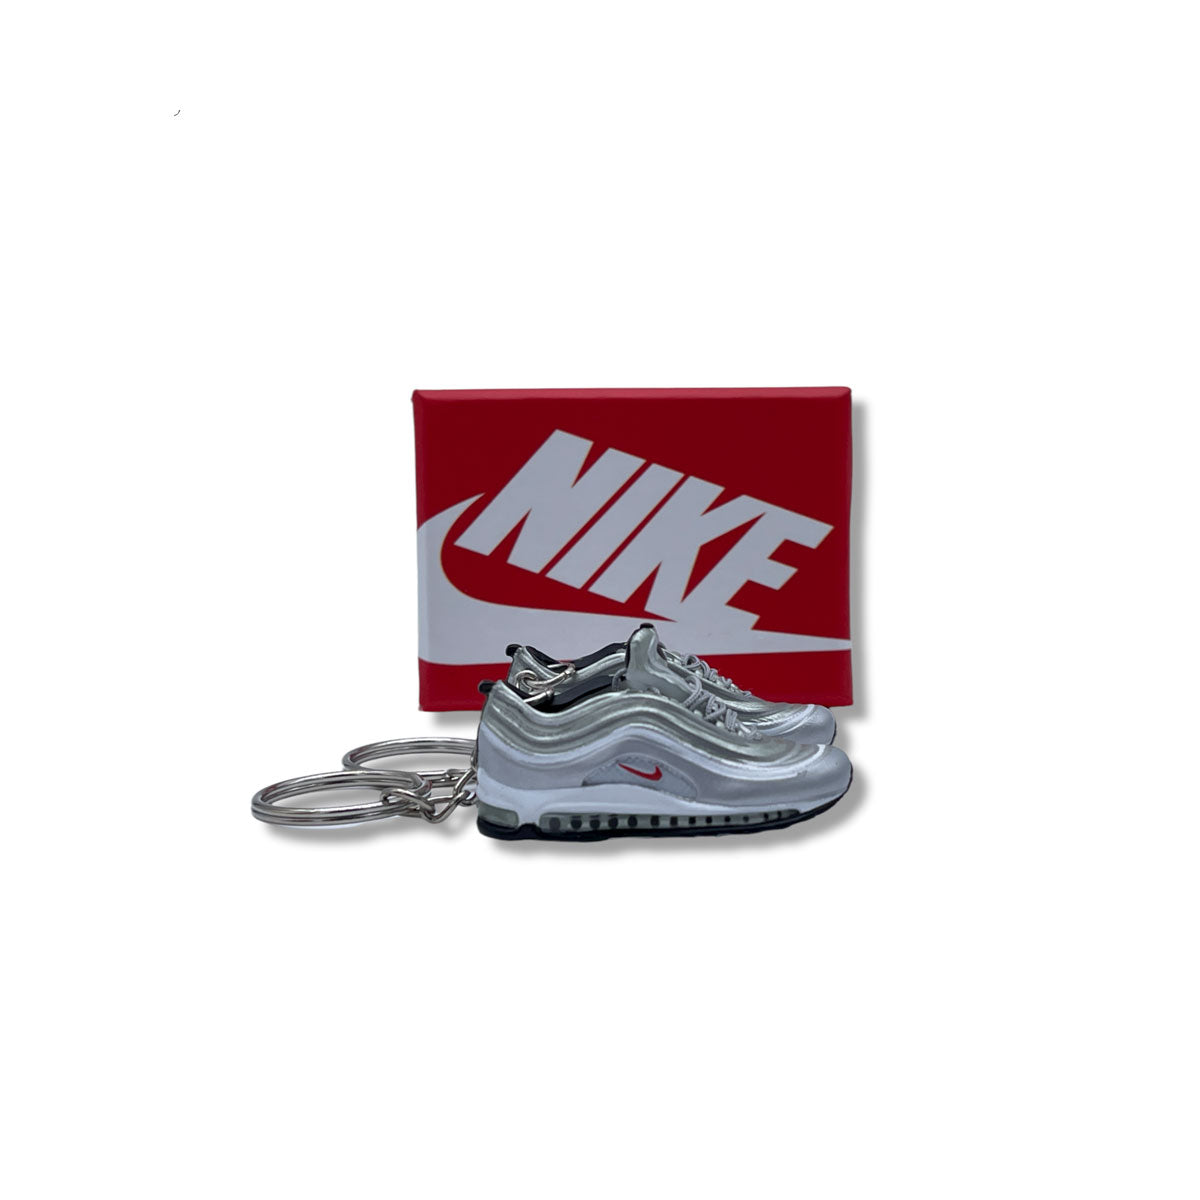 3D Sneaker Keychain- Air Max 97 OG Metallic Silver Bullet Pair - KickzStore